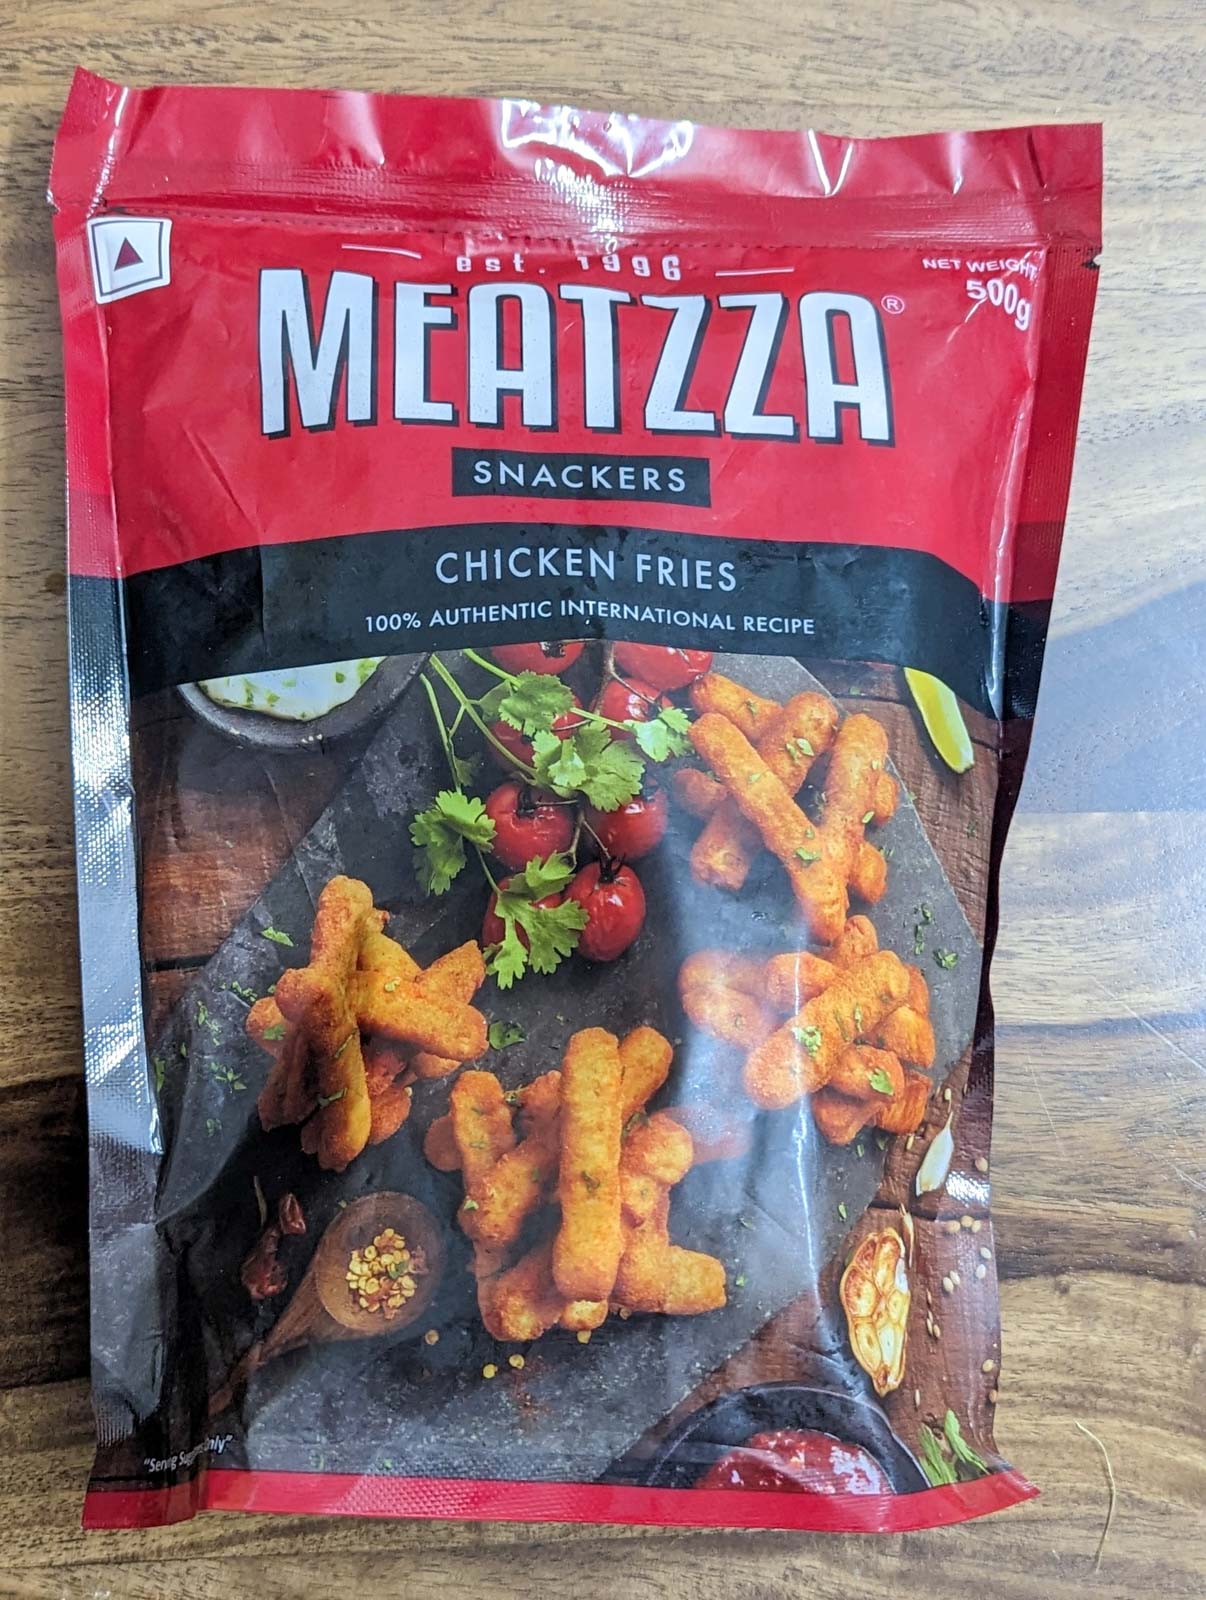 A pack of frozen chicken fries